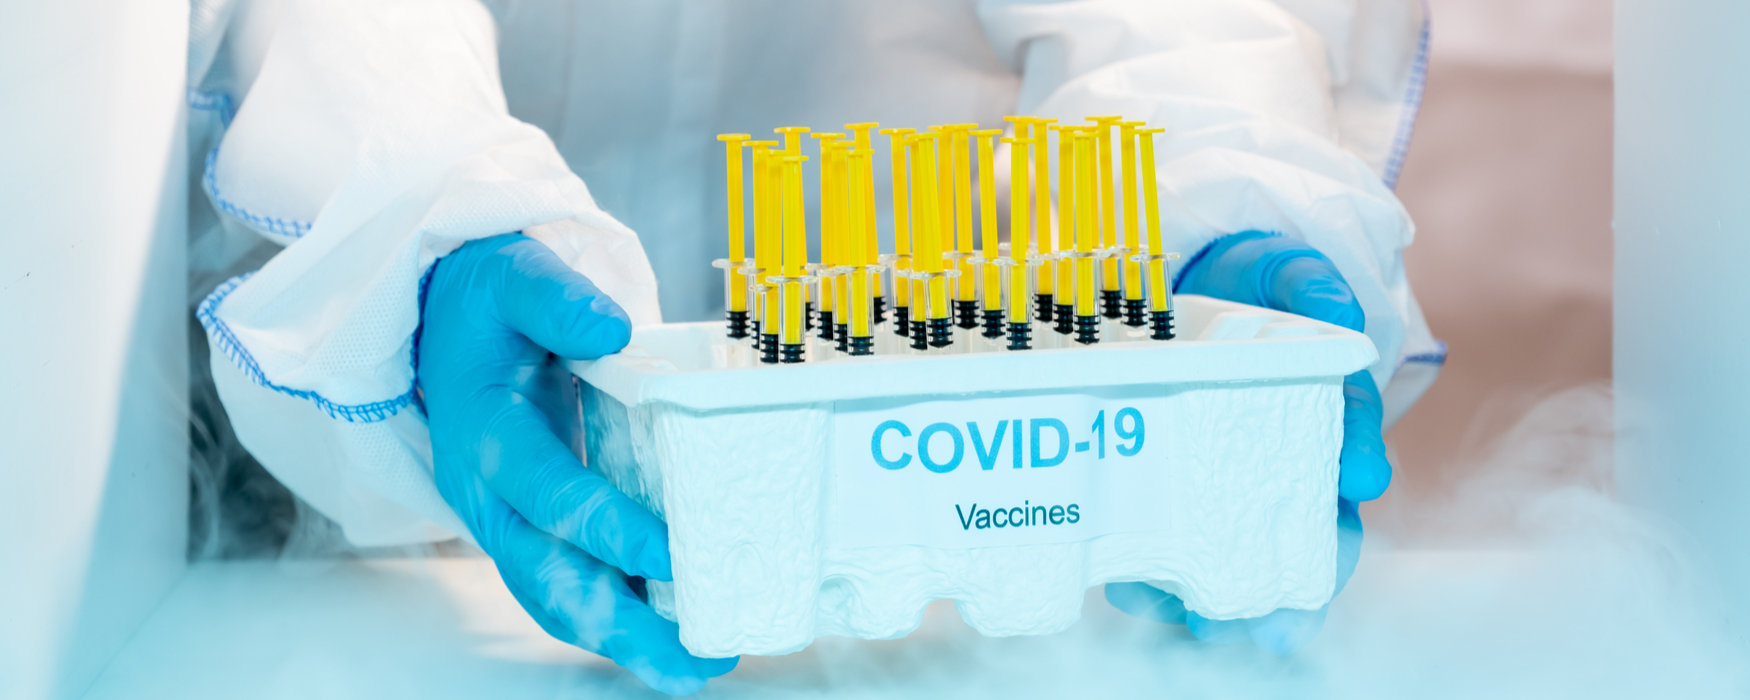 Oklahoma covid vaccine freezers - covid 19 vaccine freezer - vaccine storage in Oklahoma